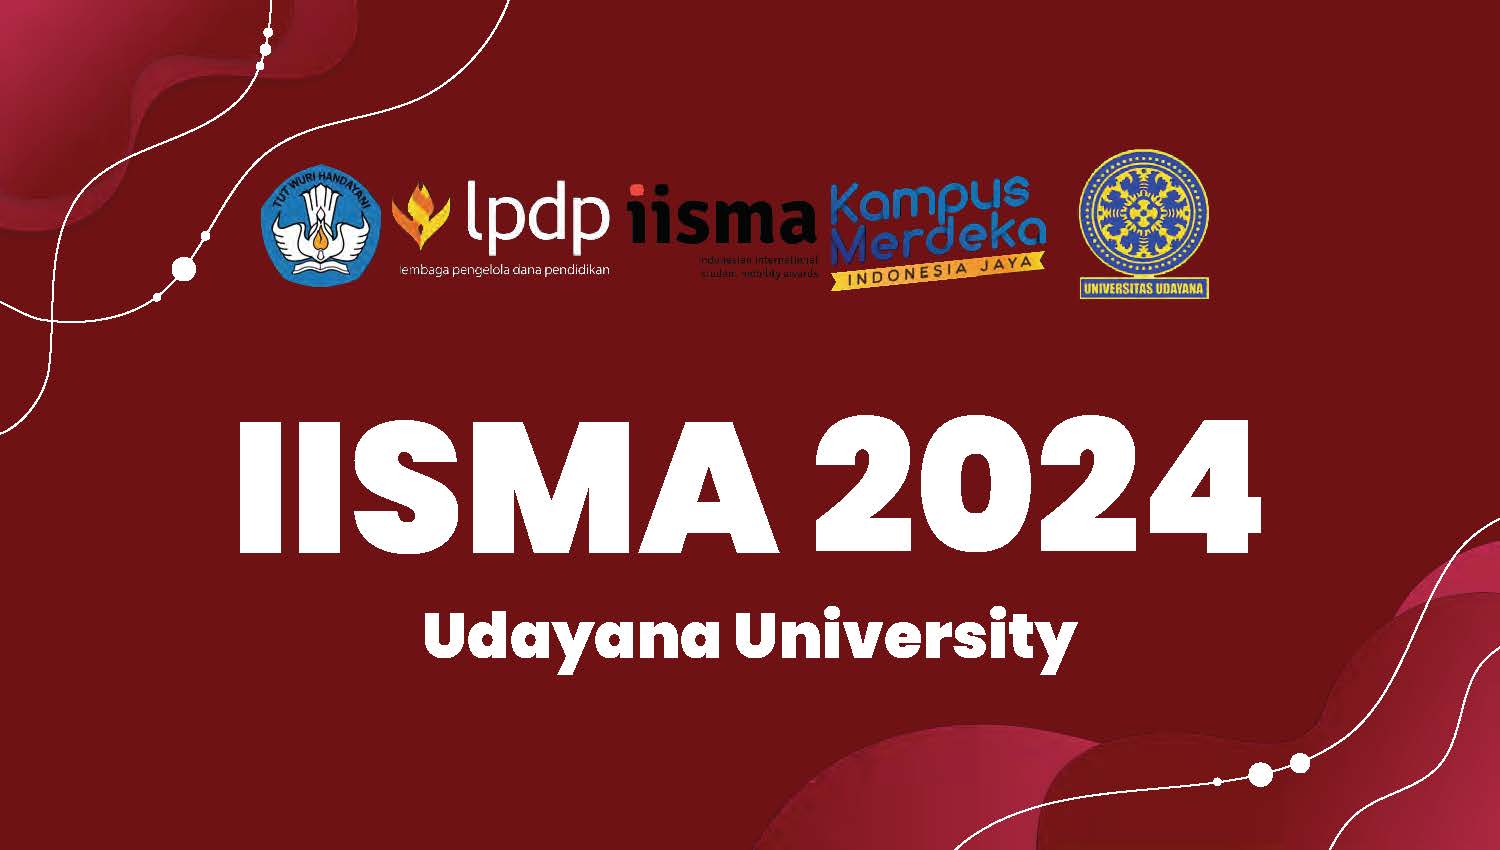 News: Indonesian International Student Mobility Awards (IISMA) 2024